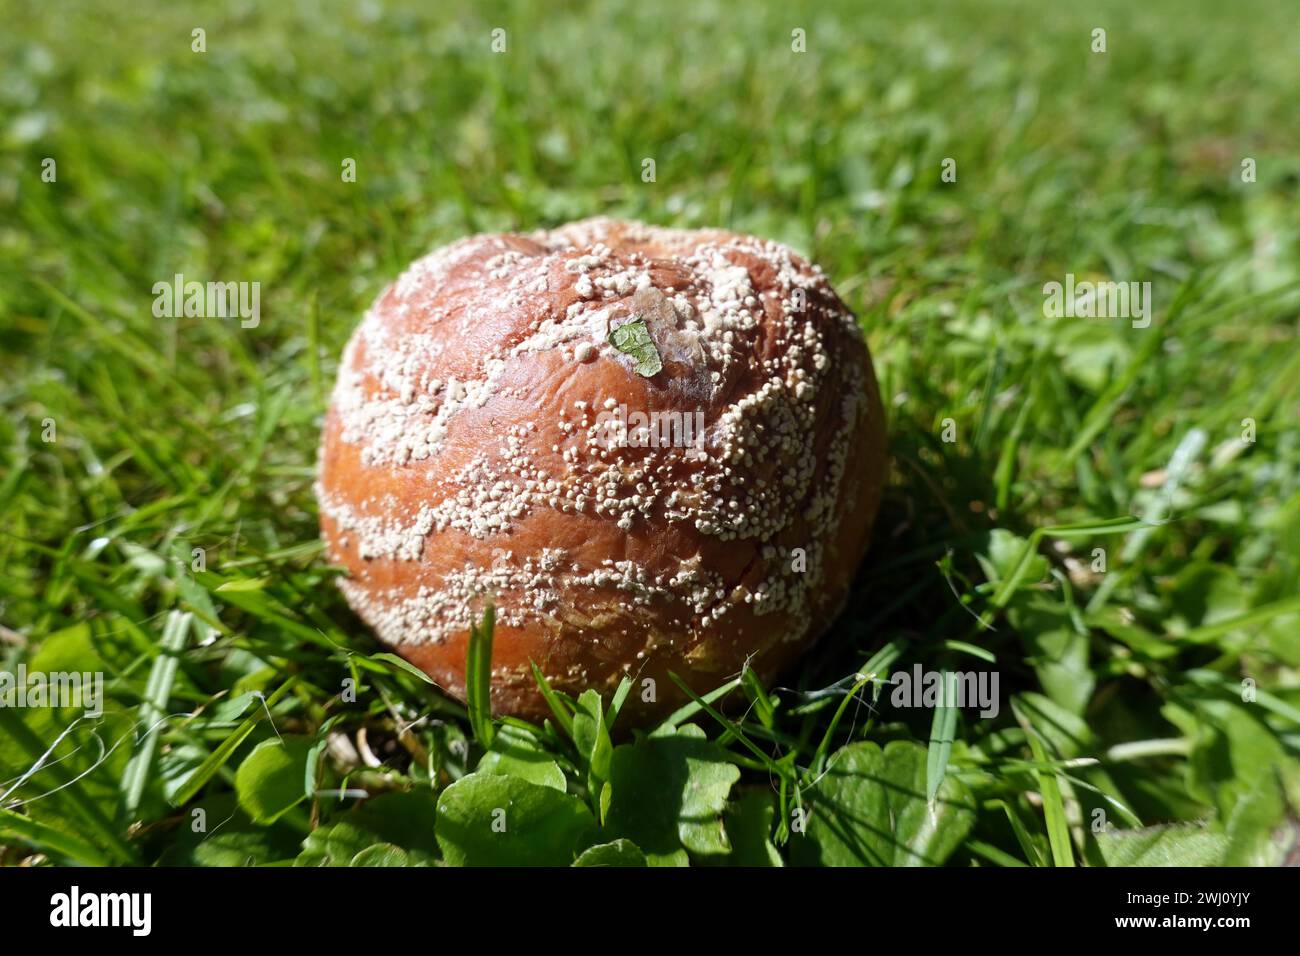 Fruit rot caused by Monilia fructigena on an apple Stock Photo